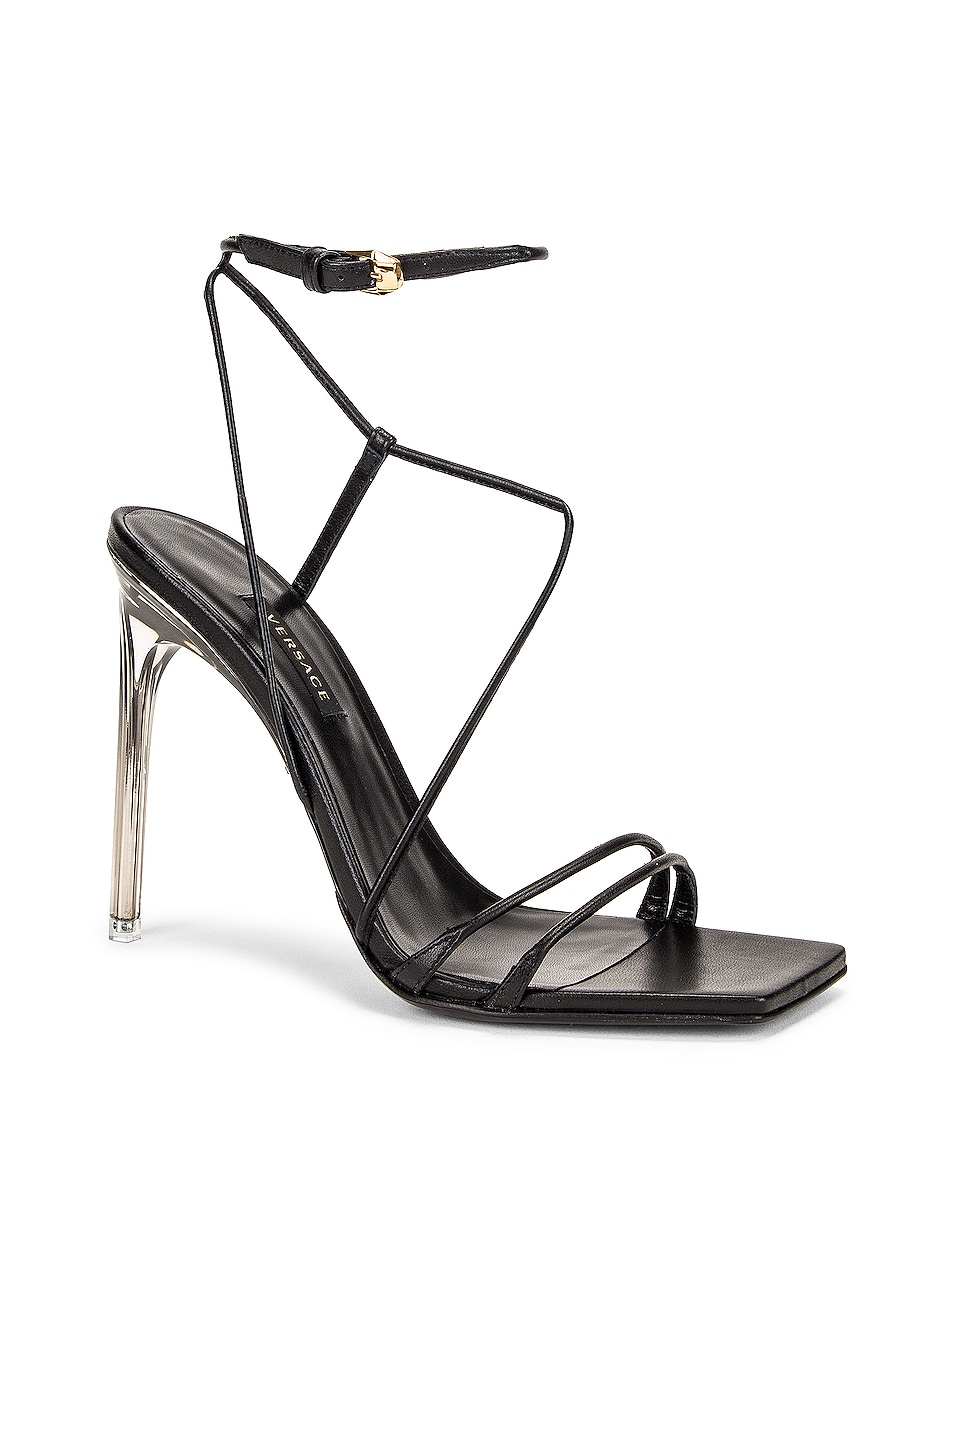 VERSACE Strappy Heels in Black & Gold | FWRD